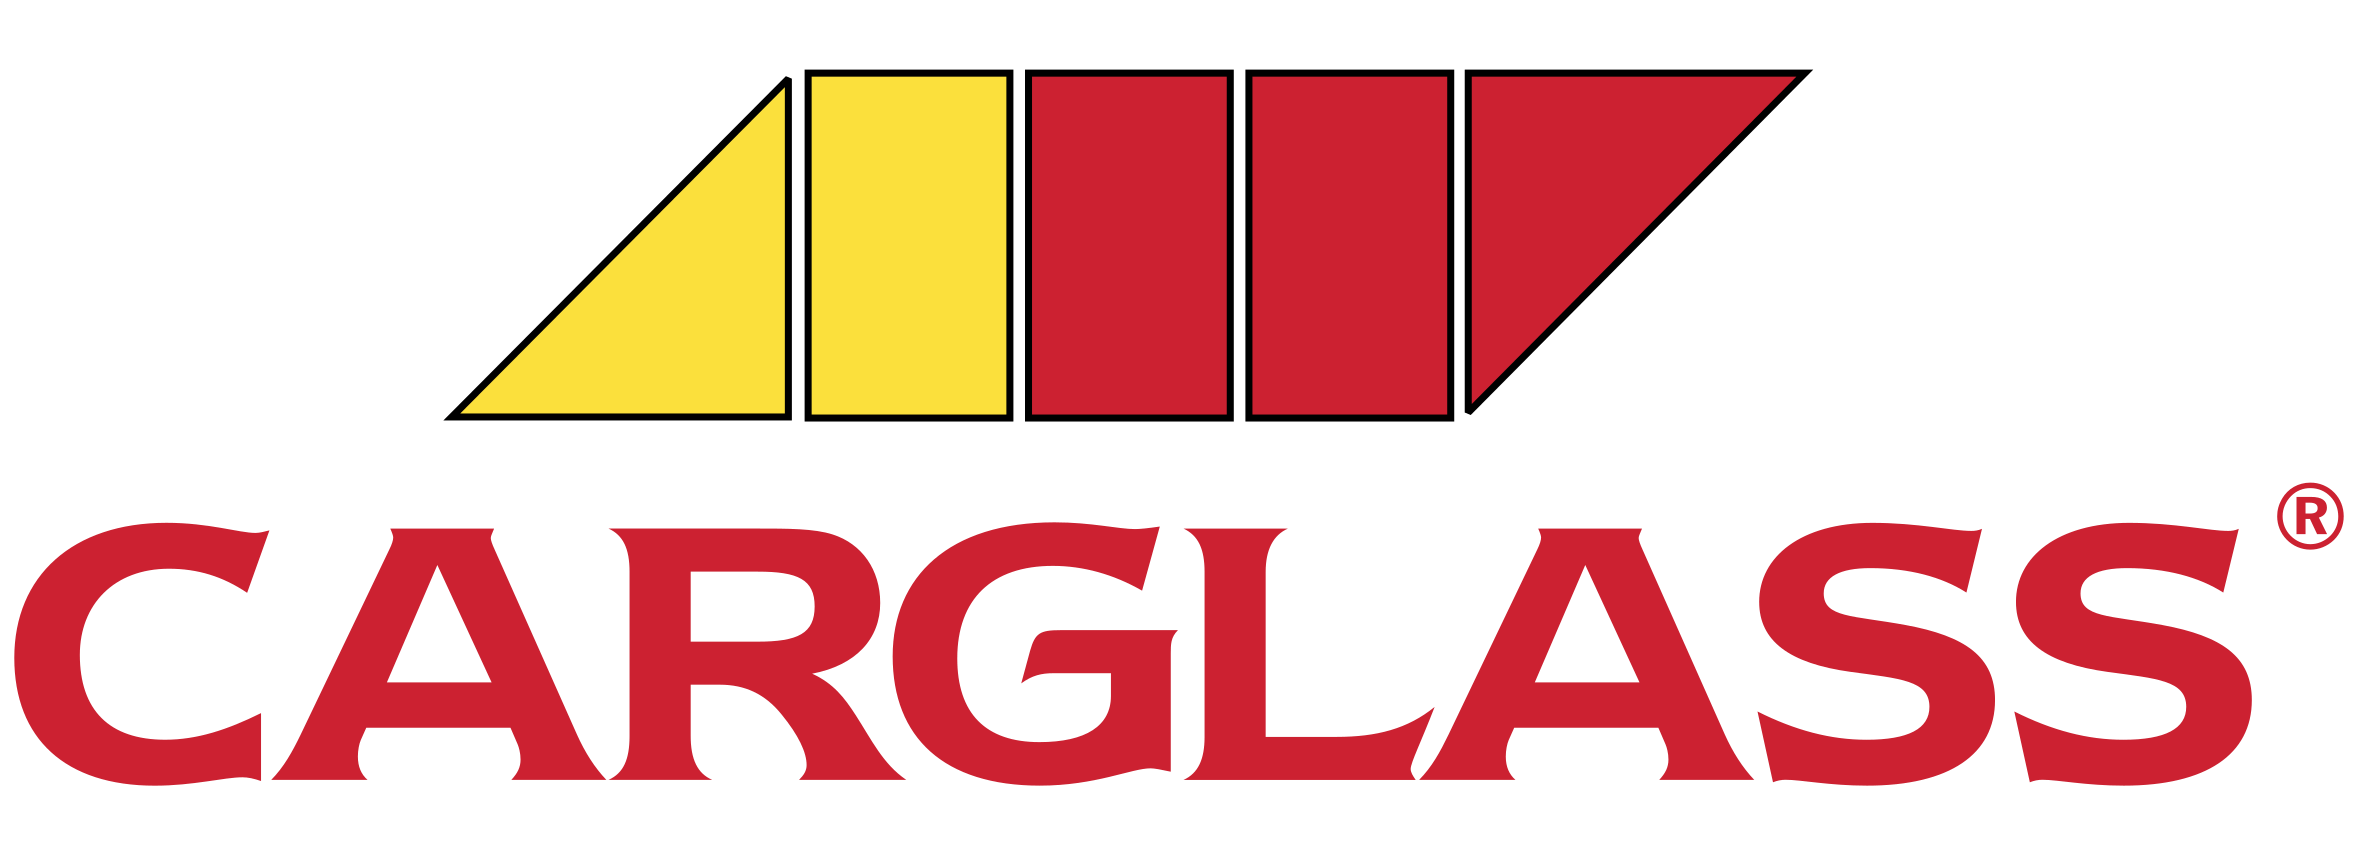 carglass-logo